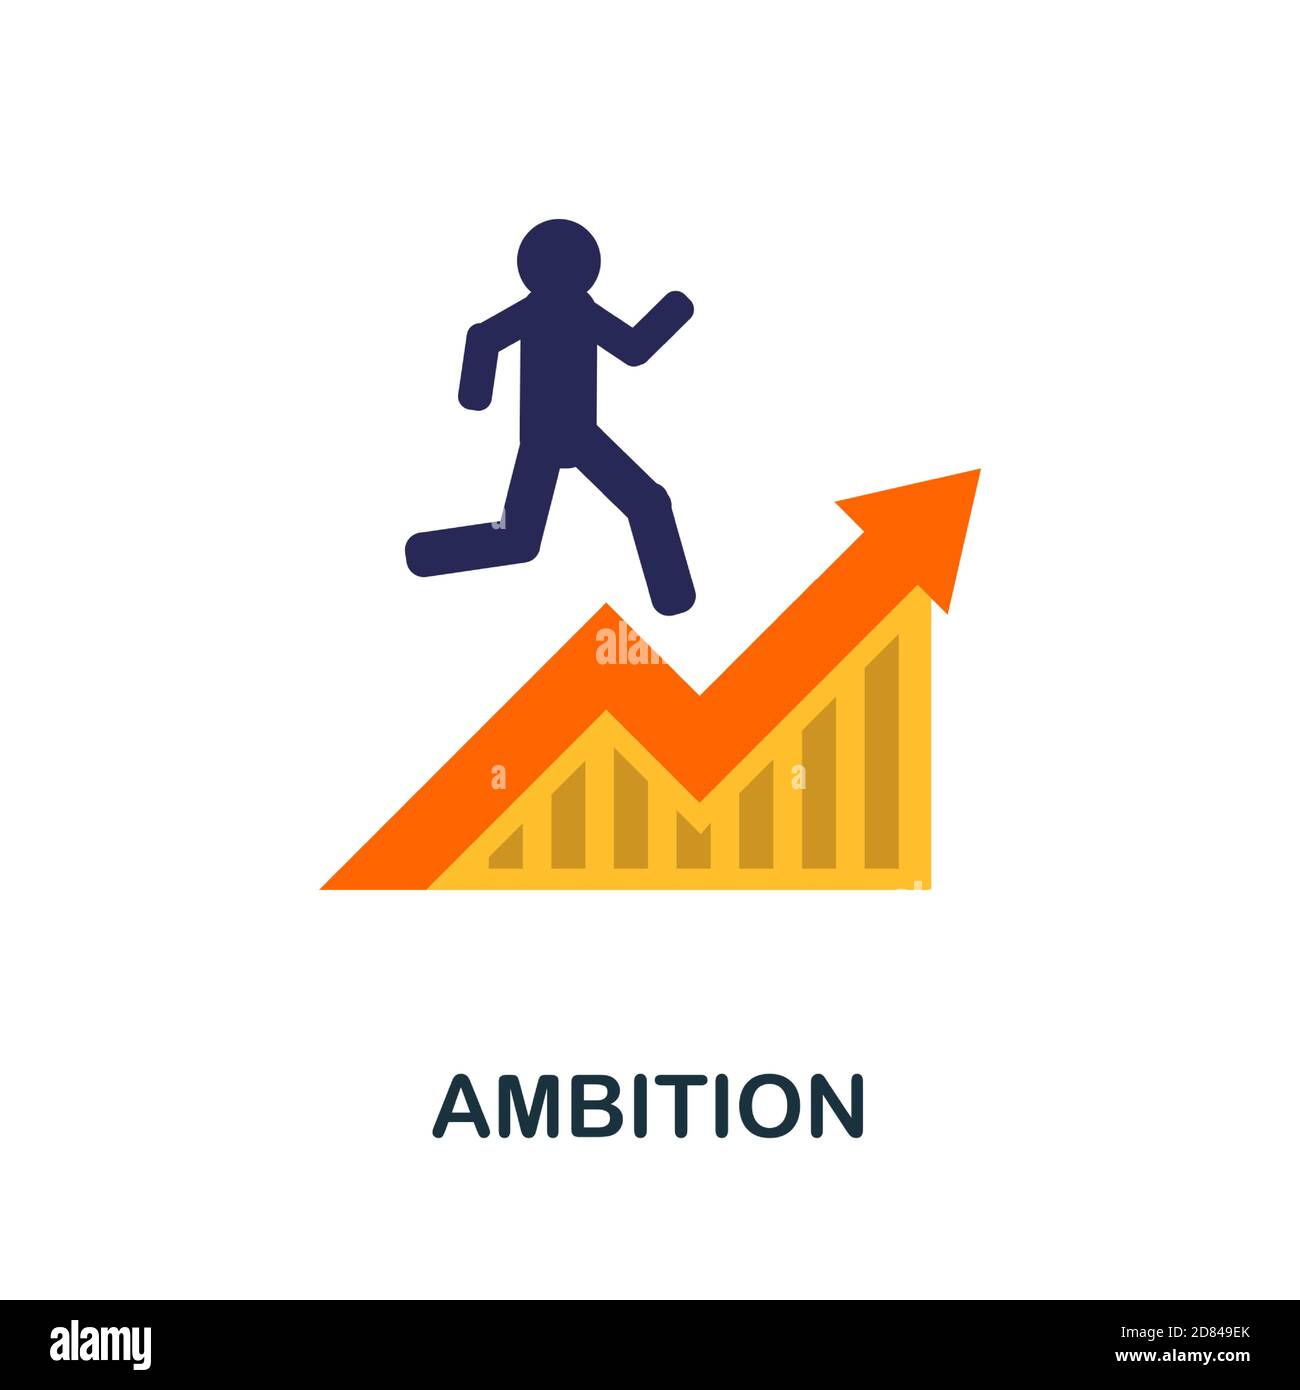 3,202 Ambition Logo Images, Stock Photos & Vectors | Shutterstock